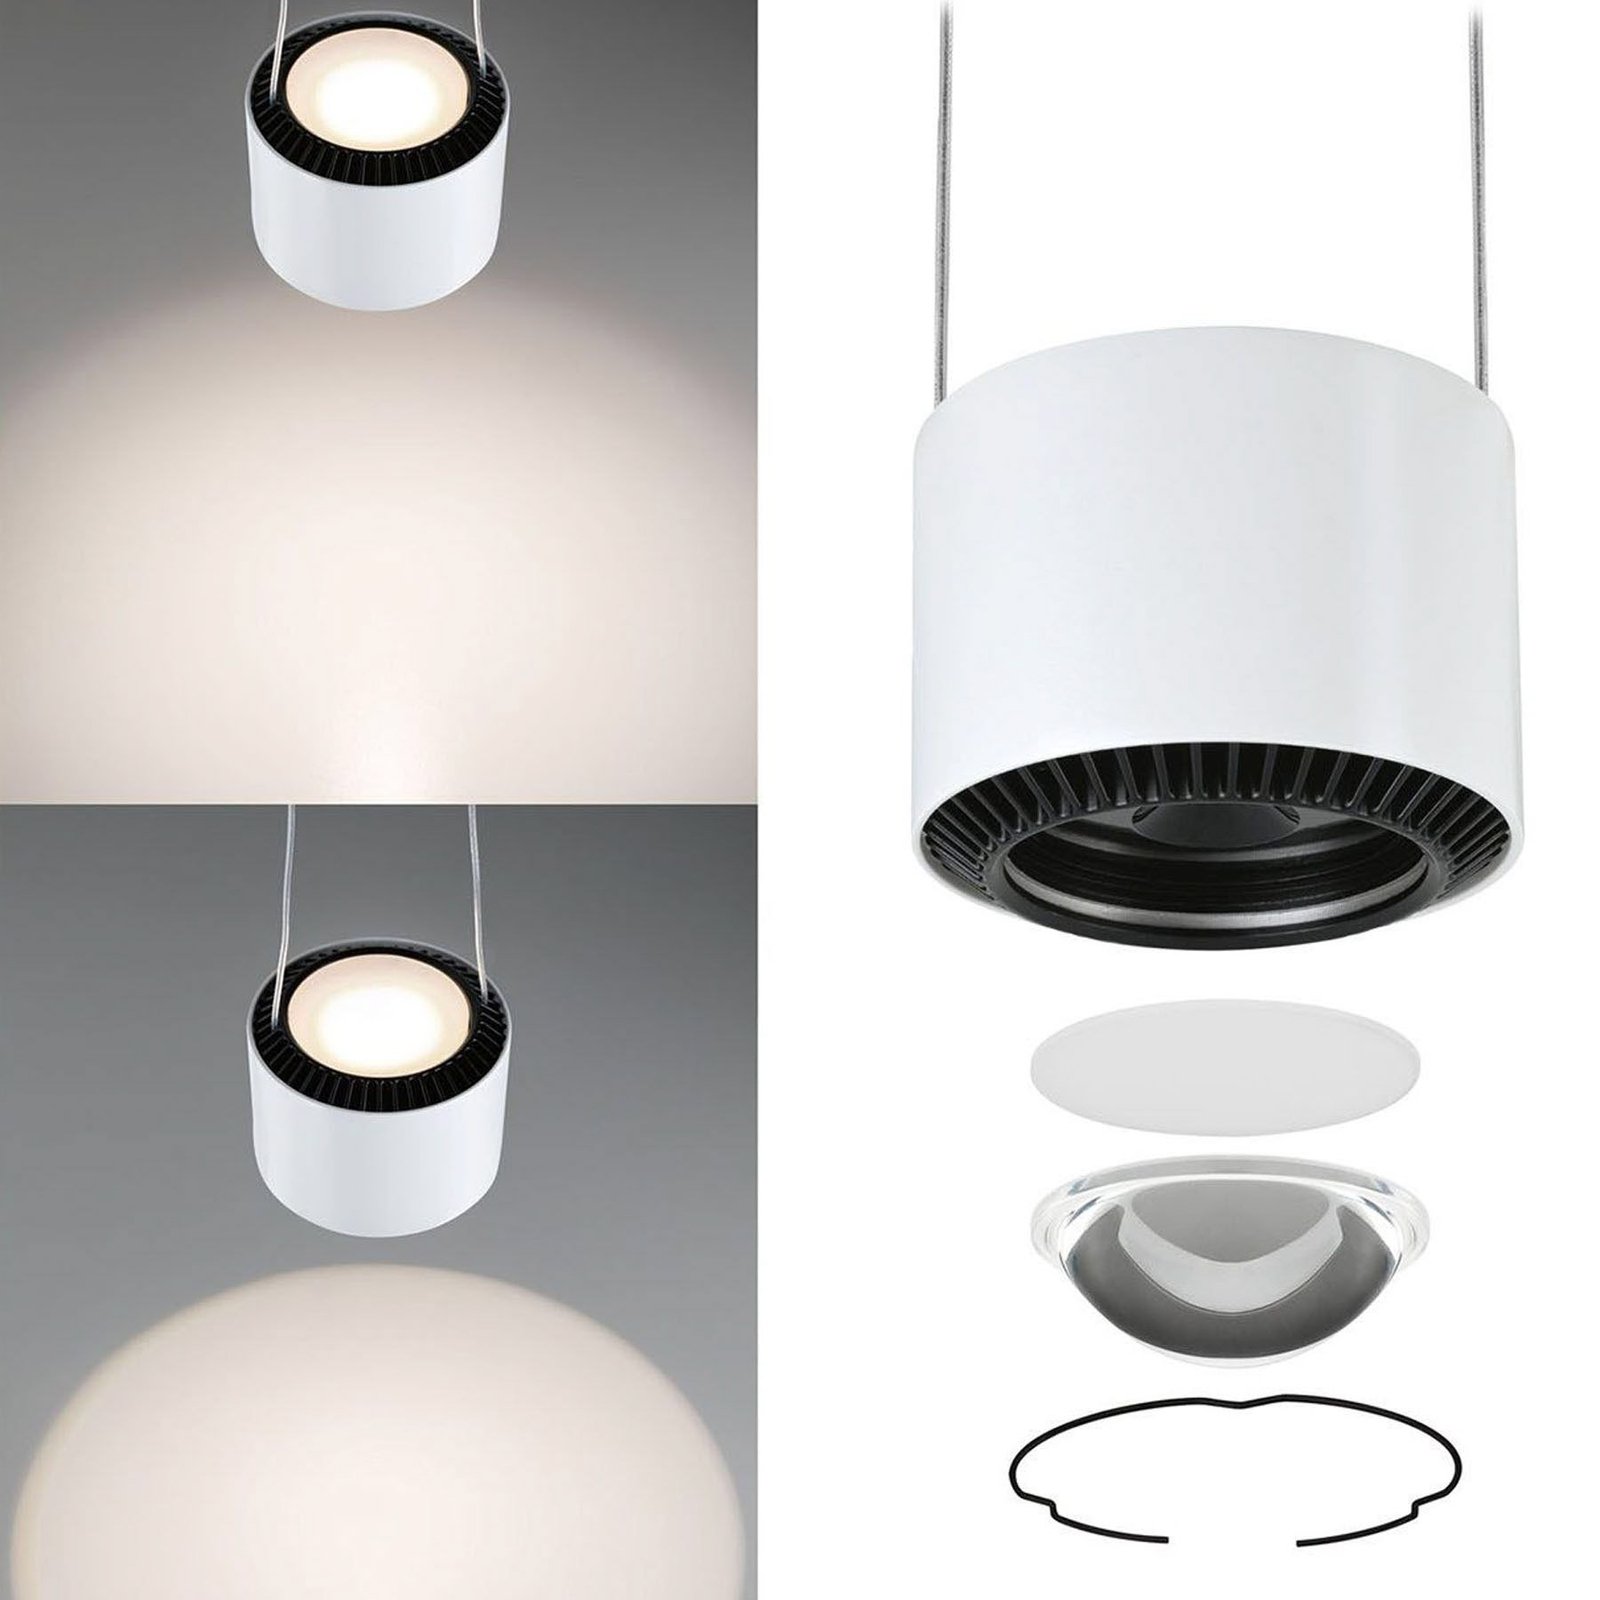 Paulmann URail Aldan LED závěsné světlo, bílá